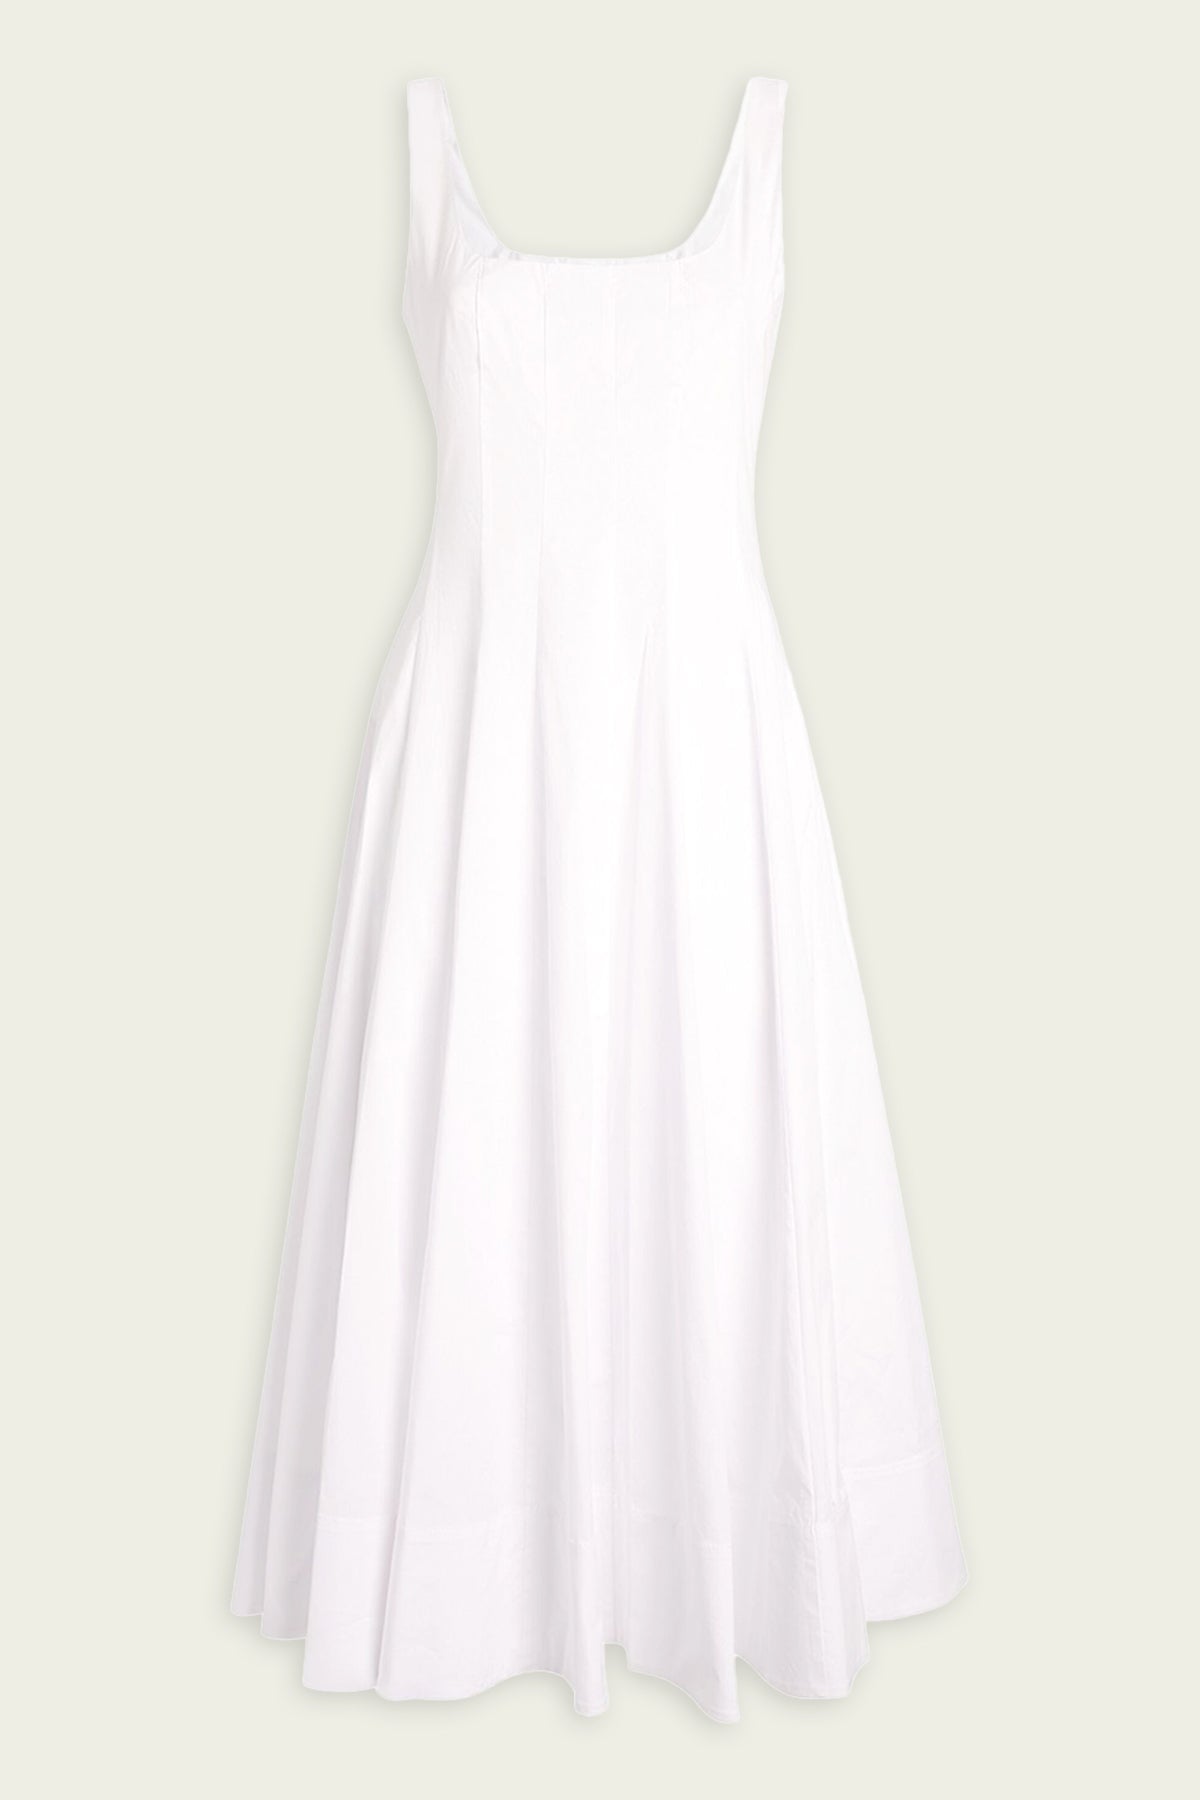 Wells Dress in White - shop-olivia.com